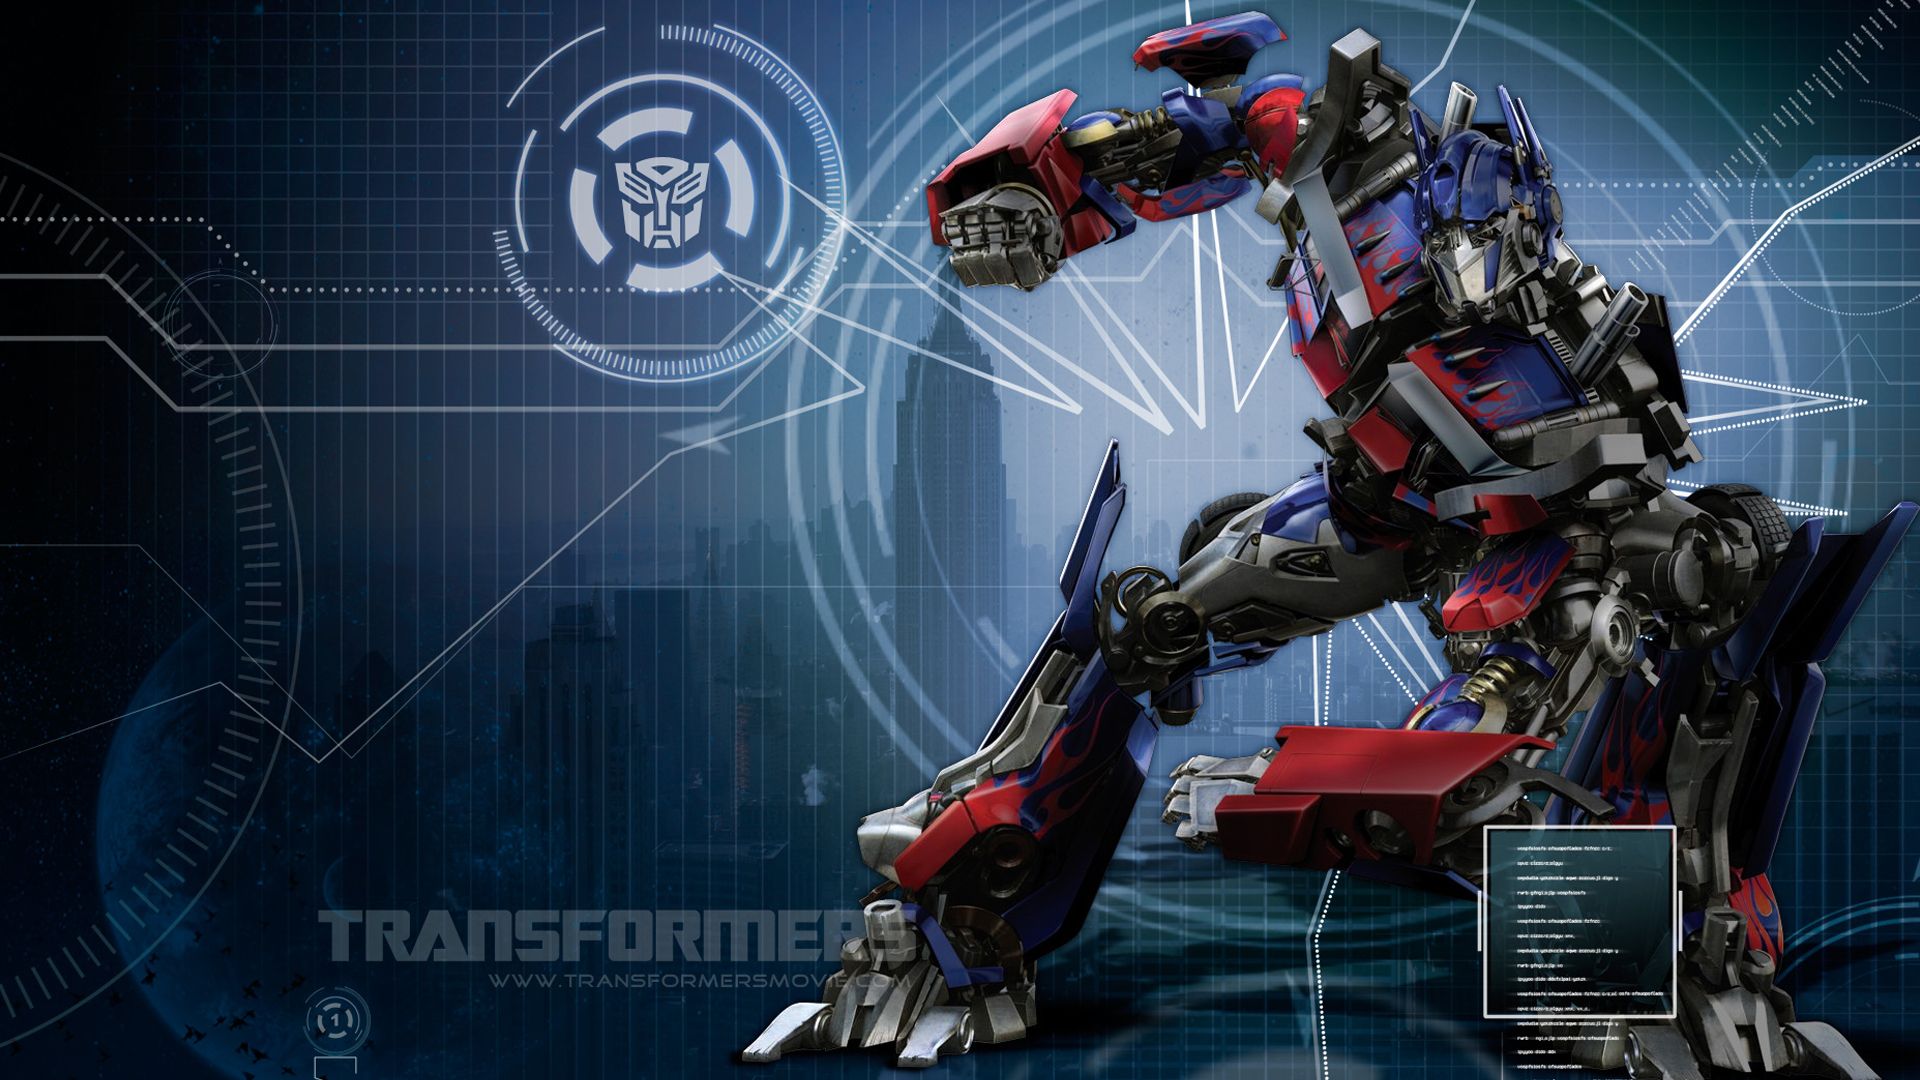 HD-Wallpapers-Transformers-Optimus-Prime-Image | wallpapers55.com ...